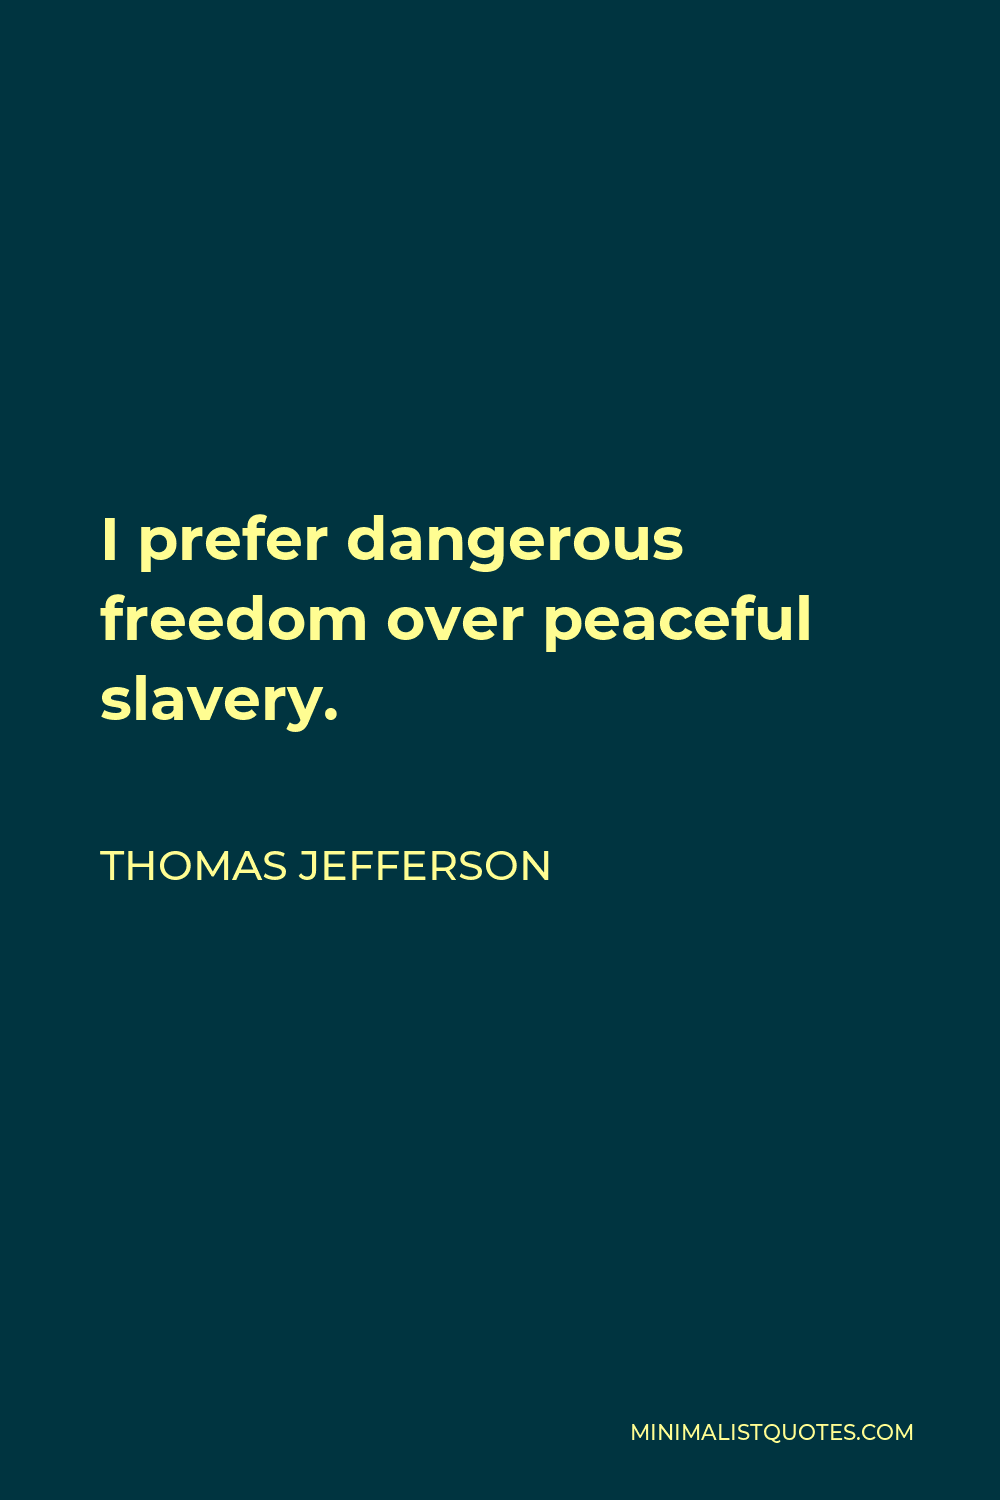 Thomas Jefferson Quote - I prefer dangerous freedom over peaceful slavery.